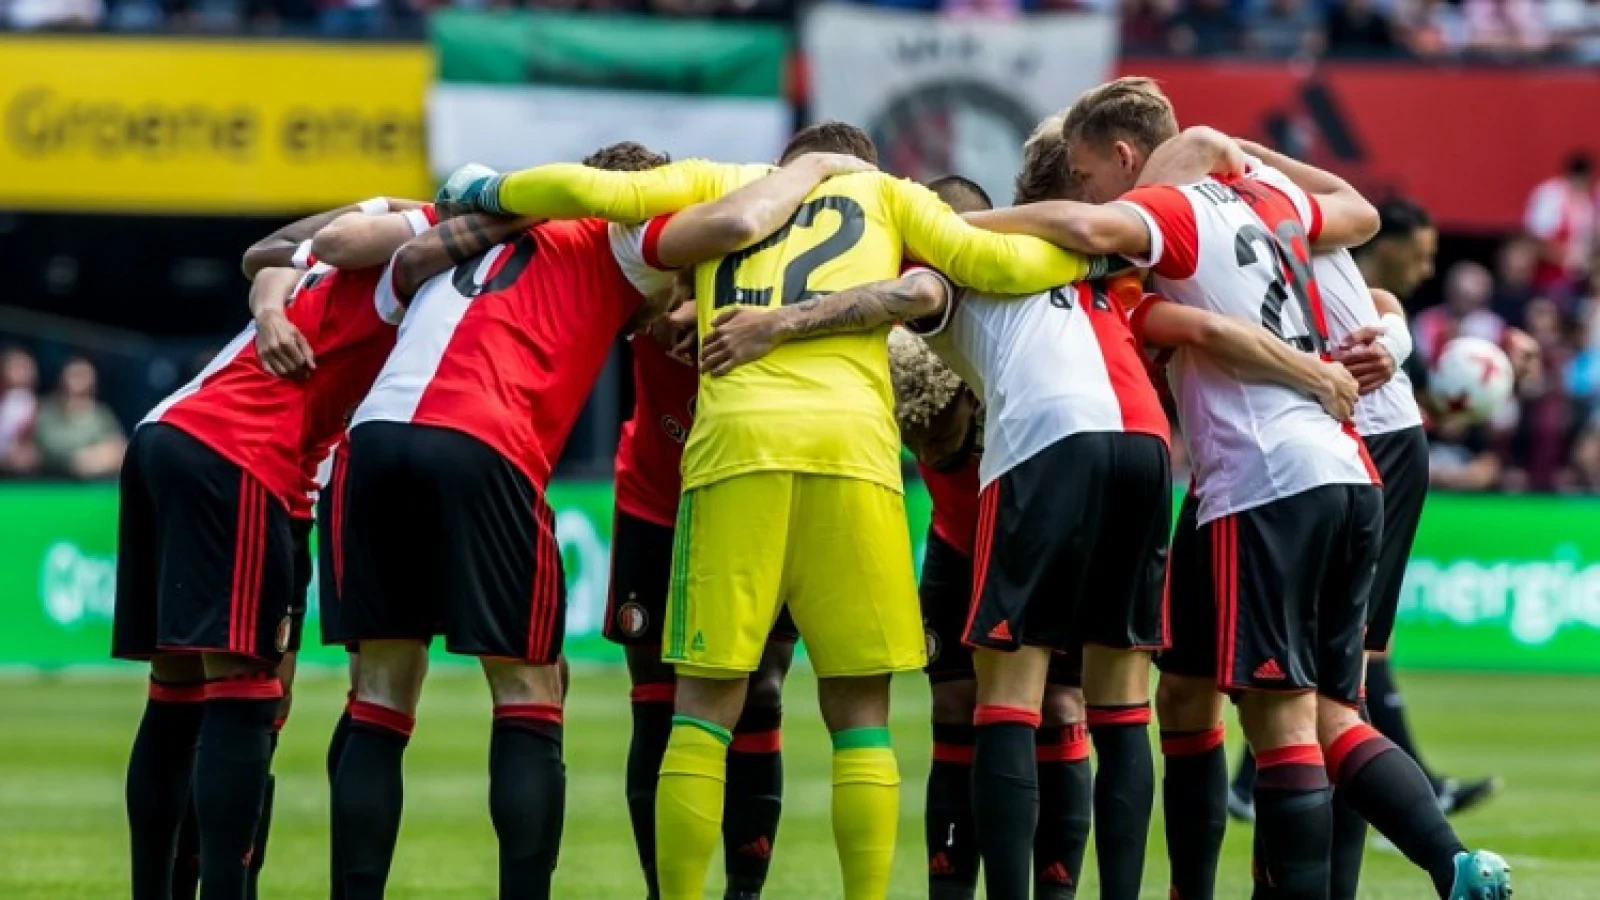 Krabbendam: 'Daar zal Feyenoord zich tegen moeten wapenen'